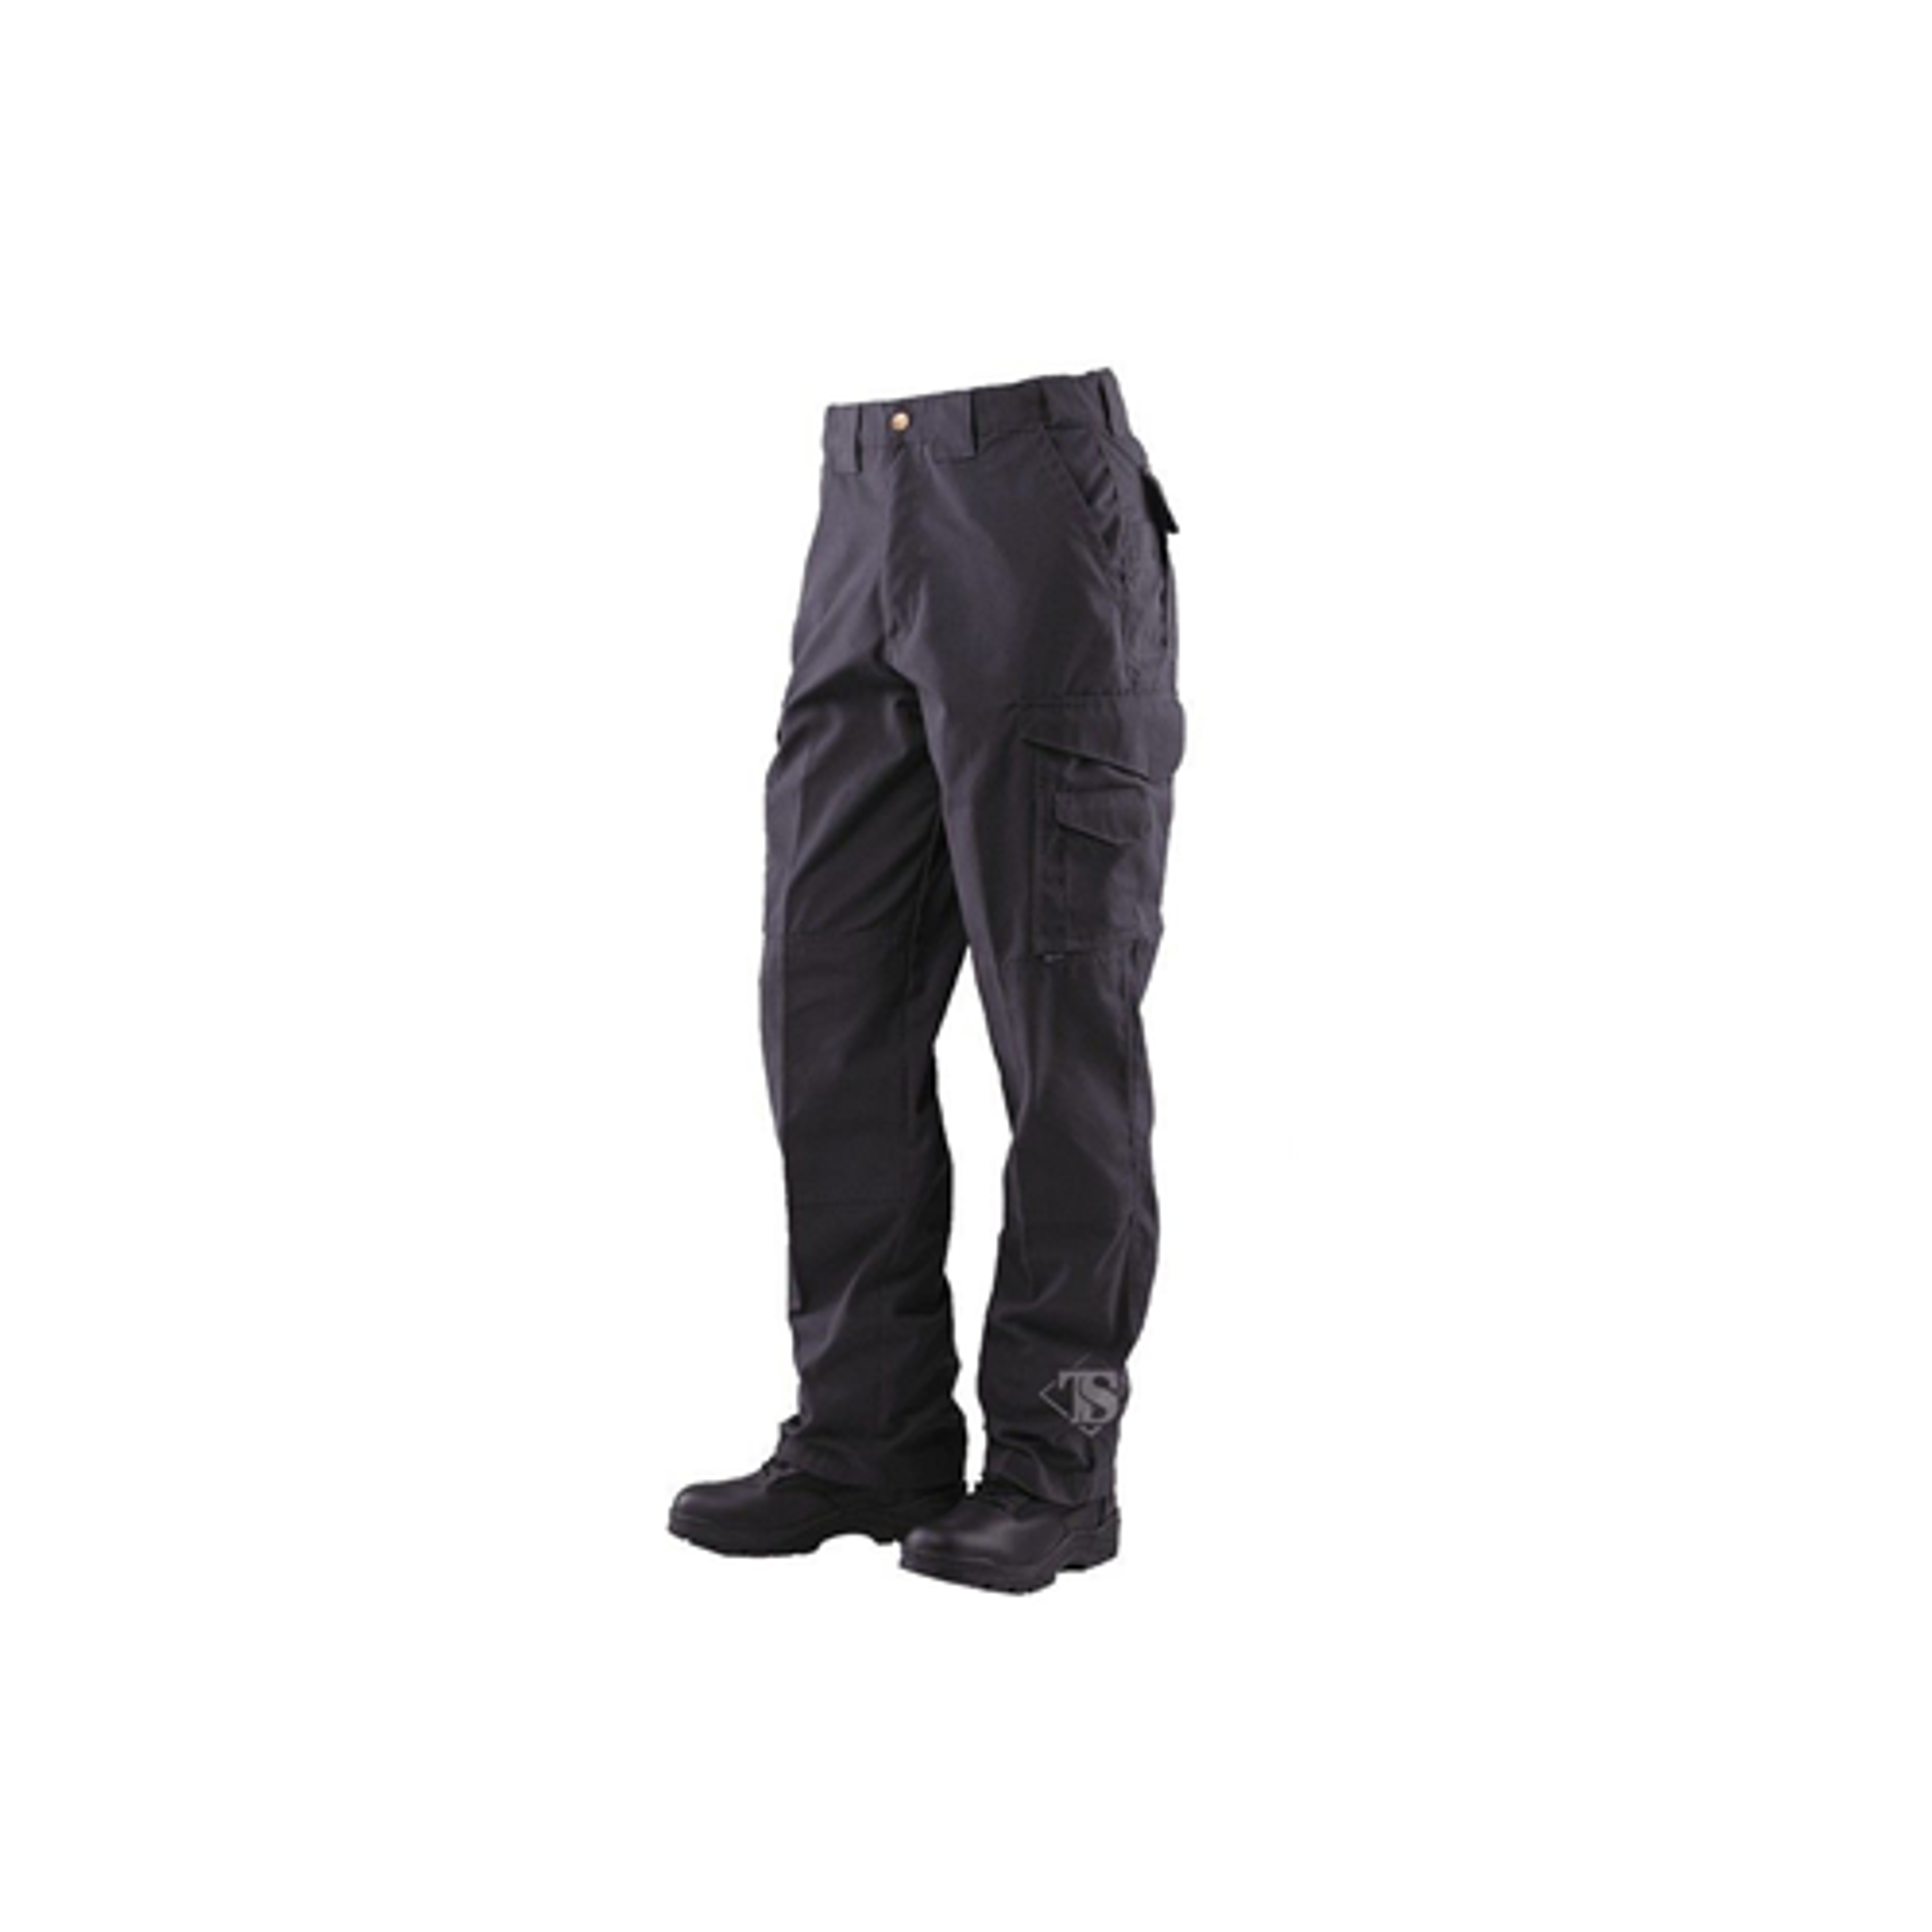 24-7 Original Tactical Pants - 6.5oz - Black - KRTSP-1062004